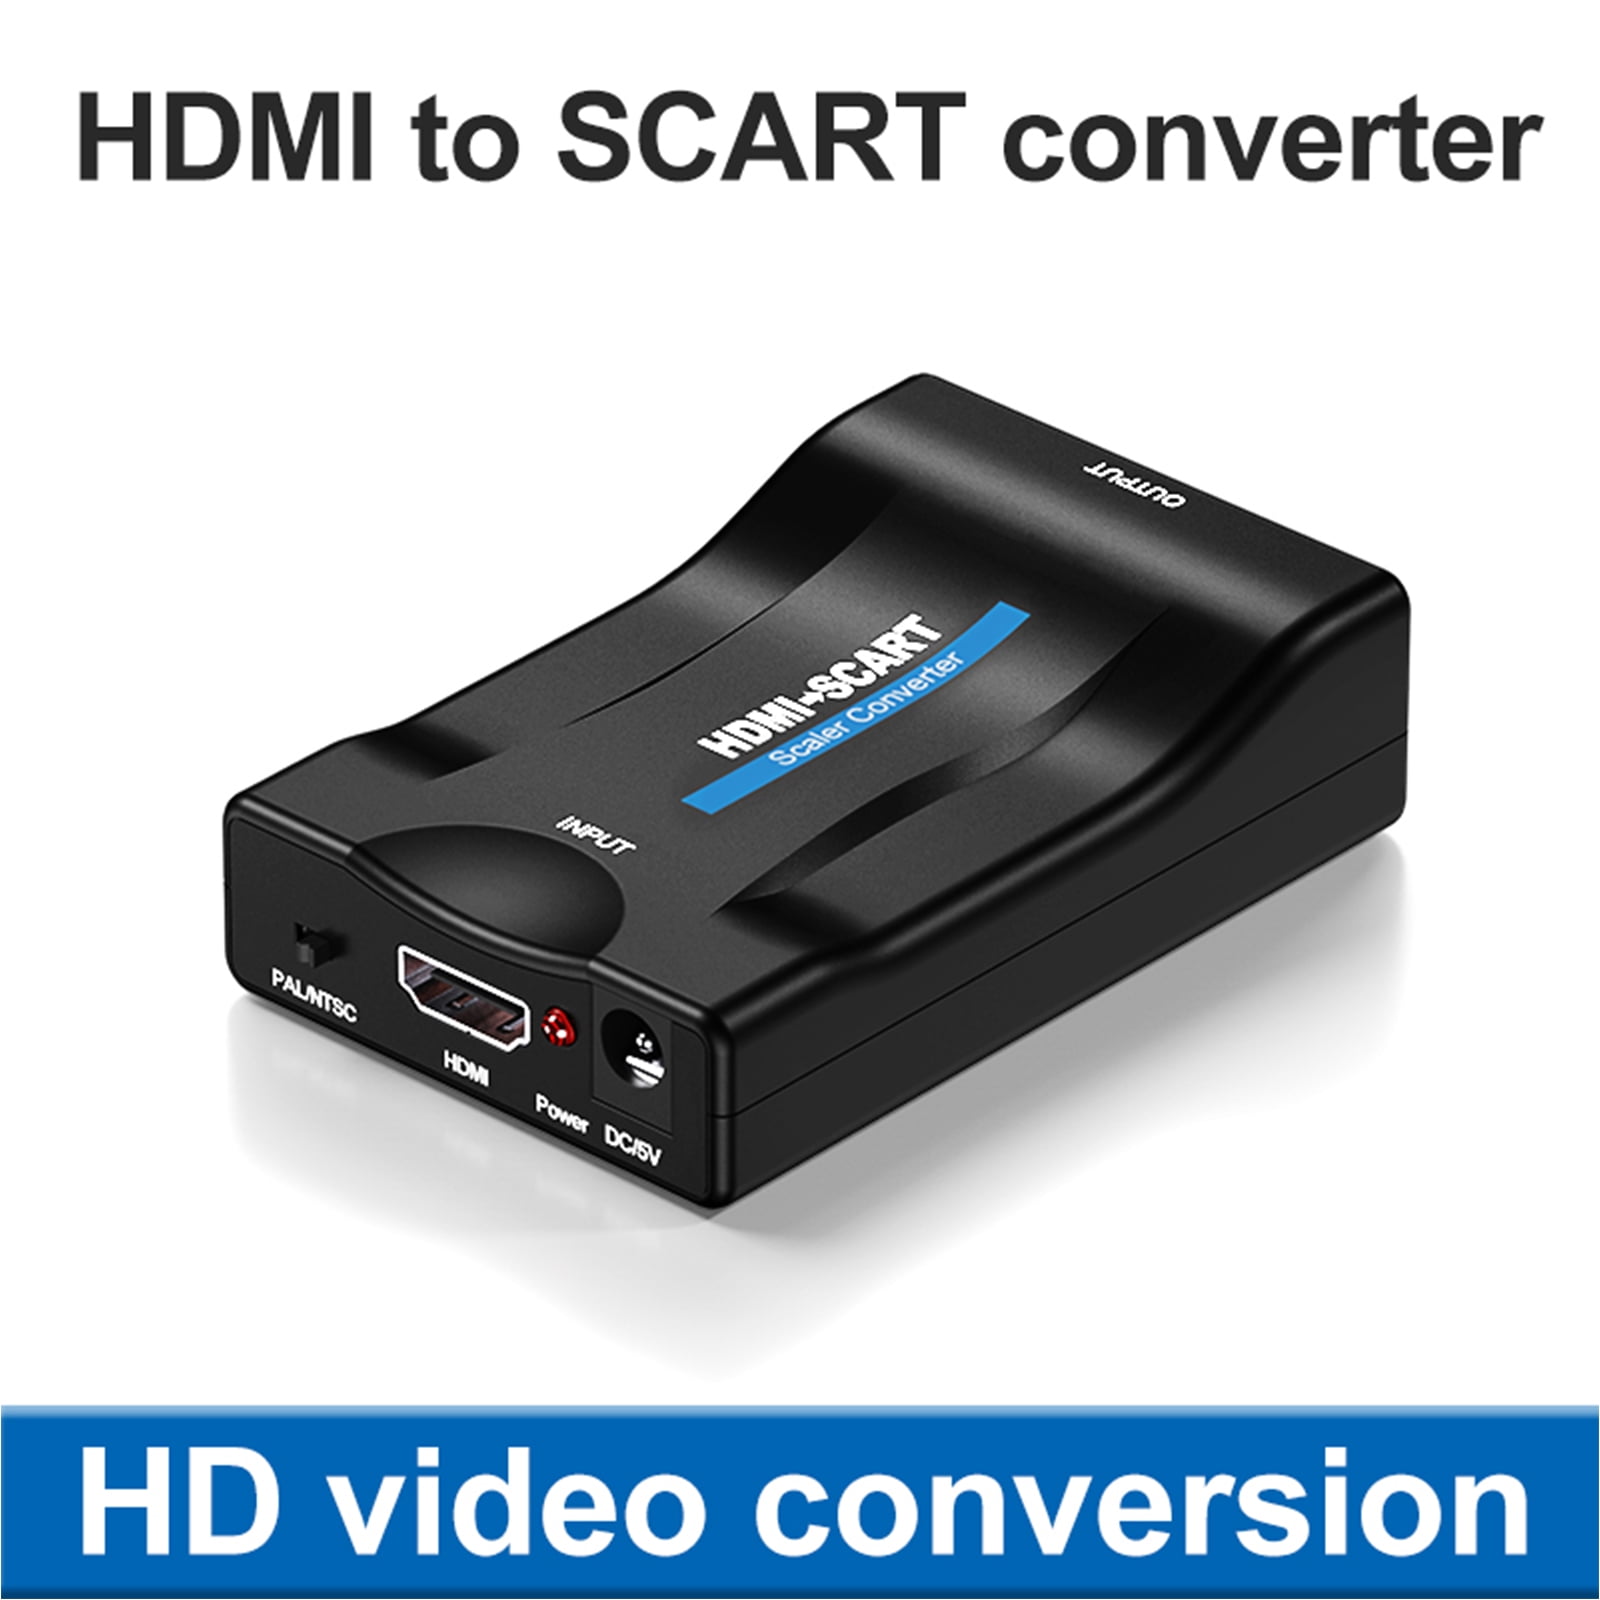 SCART to HDMI Converter, 1080p/720p, PAL/ NTSC 3.58/ NTSC 4.43/ SECAM, Compatible with DVD, Box, N64, VHS, PS4, VCR, Blu-ray - Walmart.com